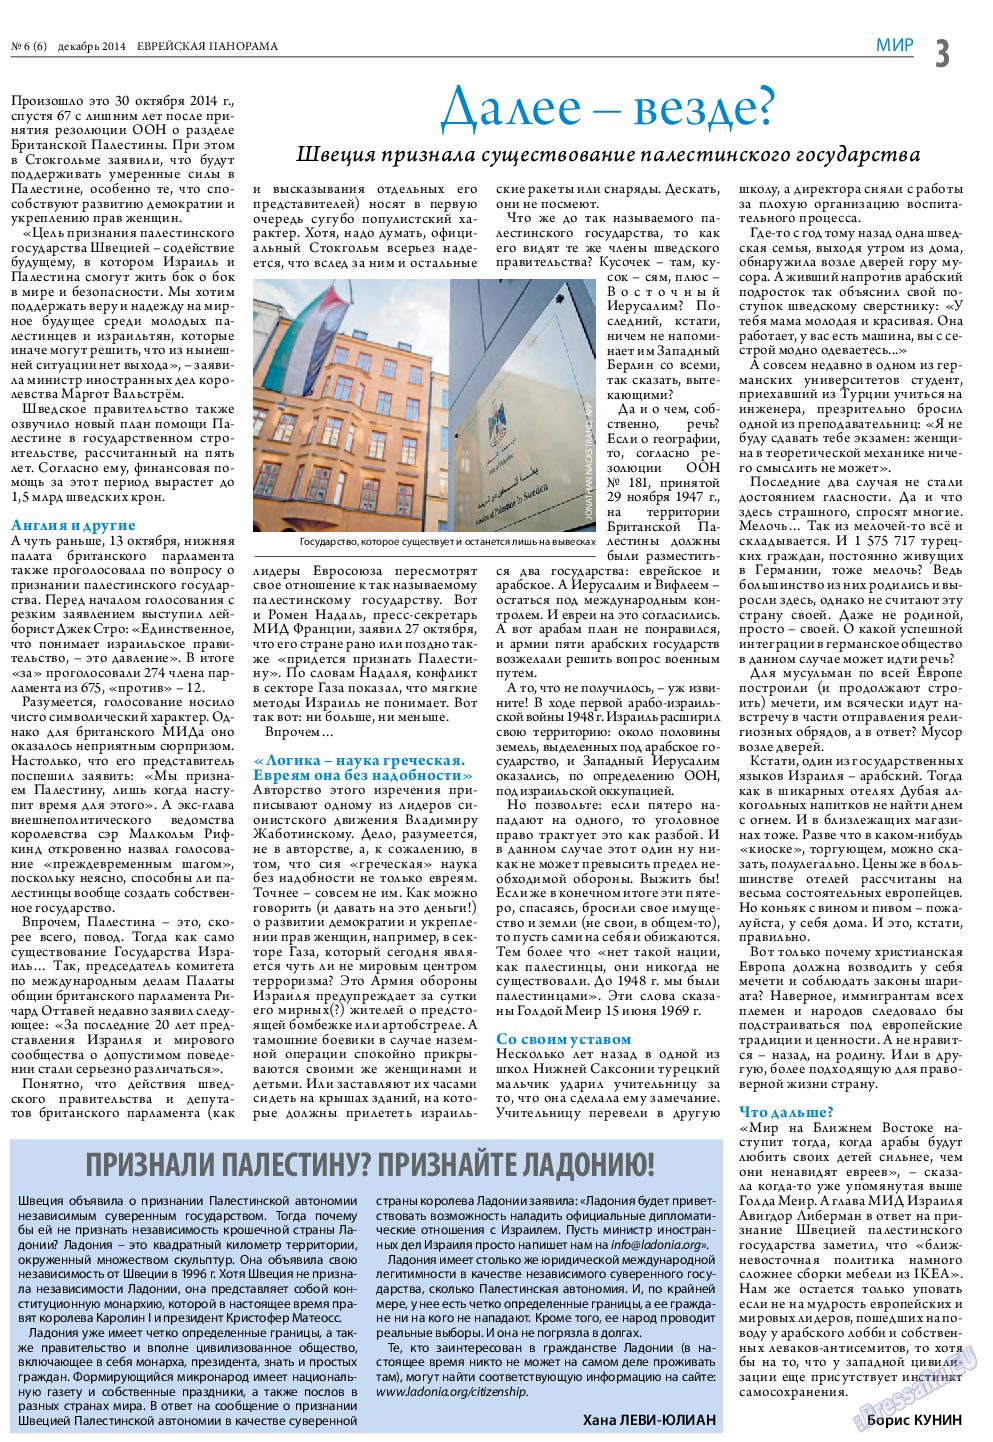 Еврейская панорама, газета. 2014 №6 стр.3